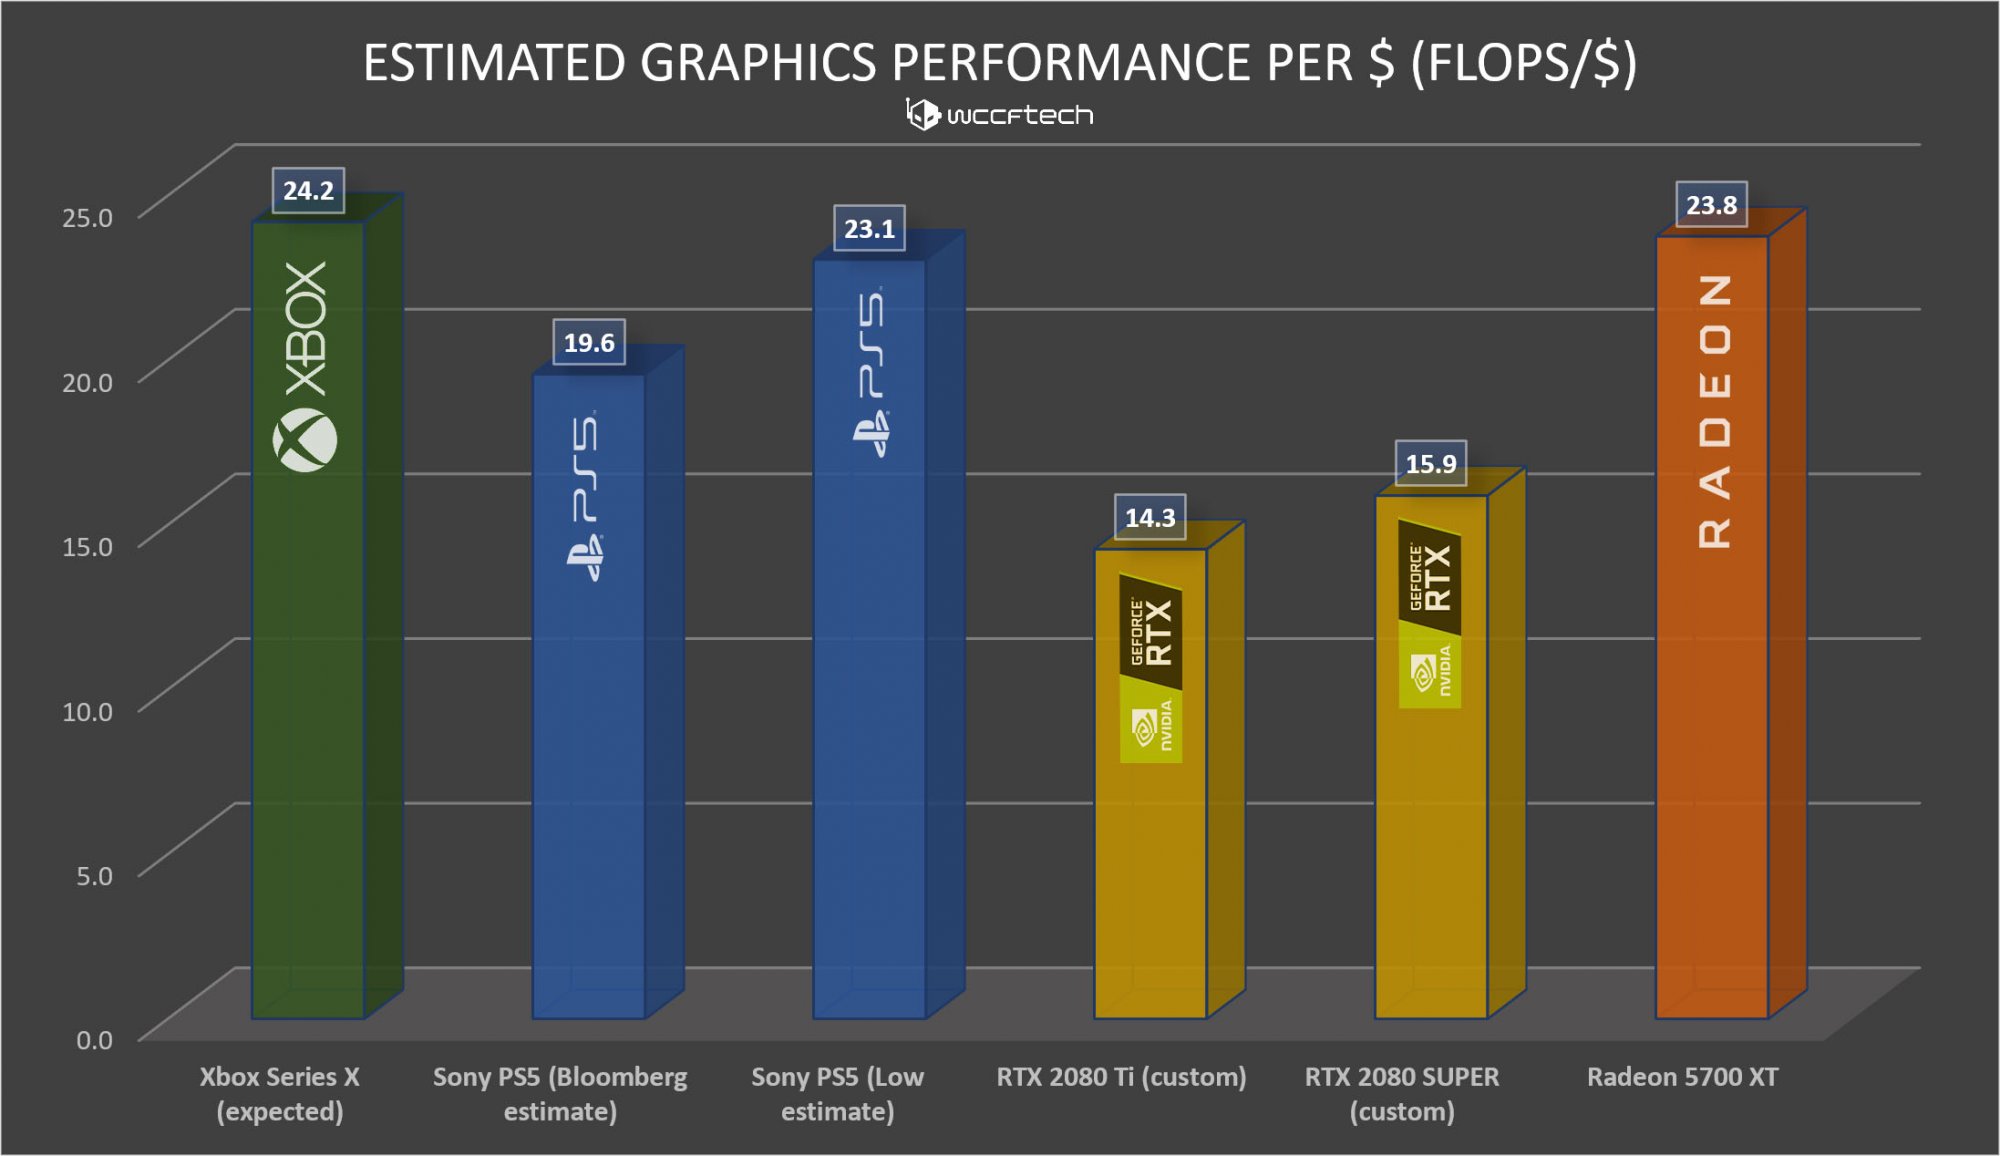 xbox-series-x-vs-sony-ps5-graphics-performance-per-dollar-1.jpg